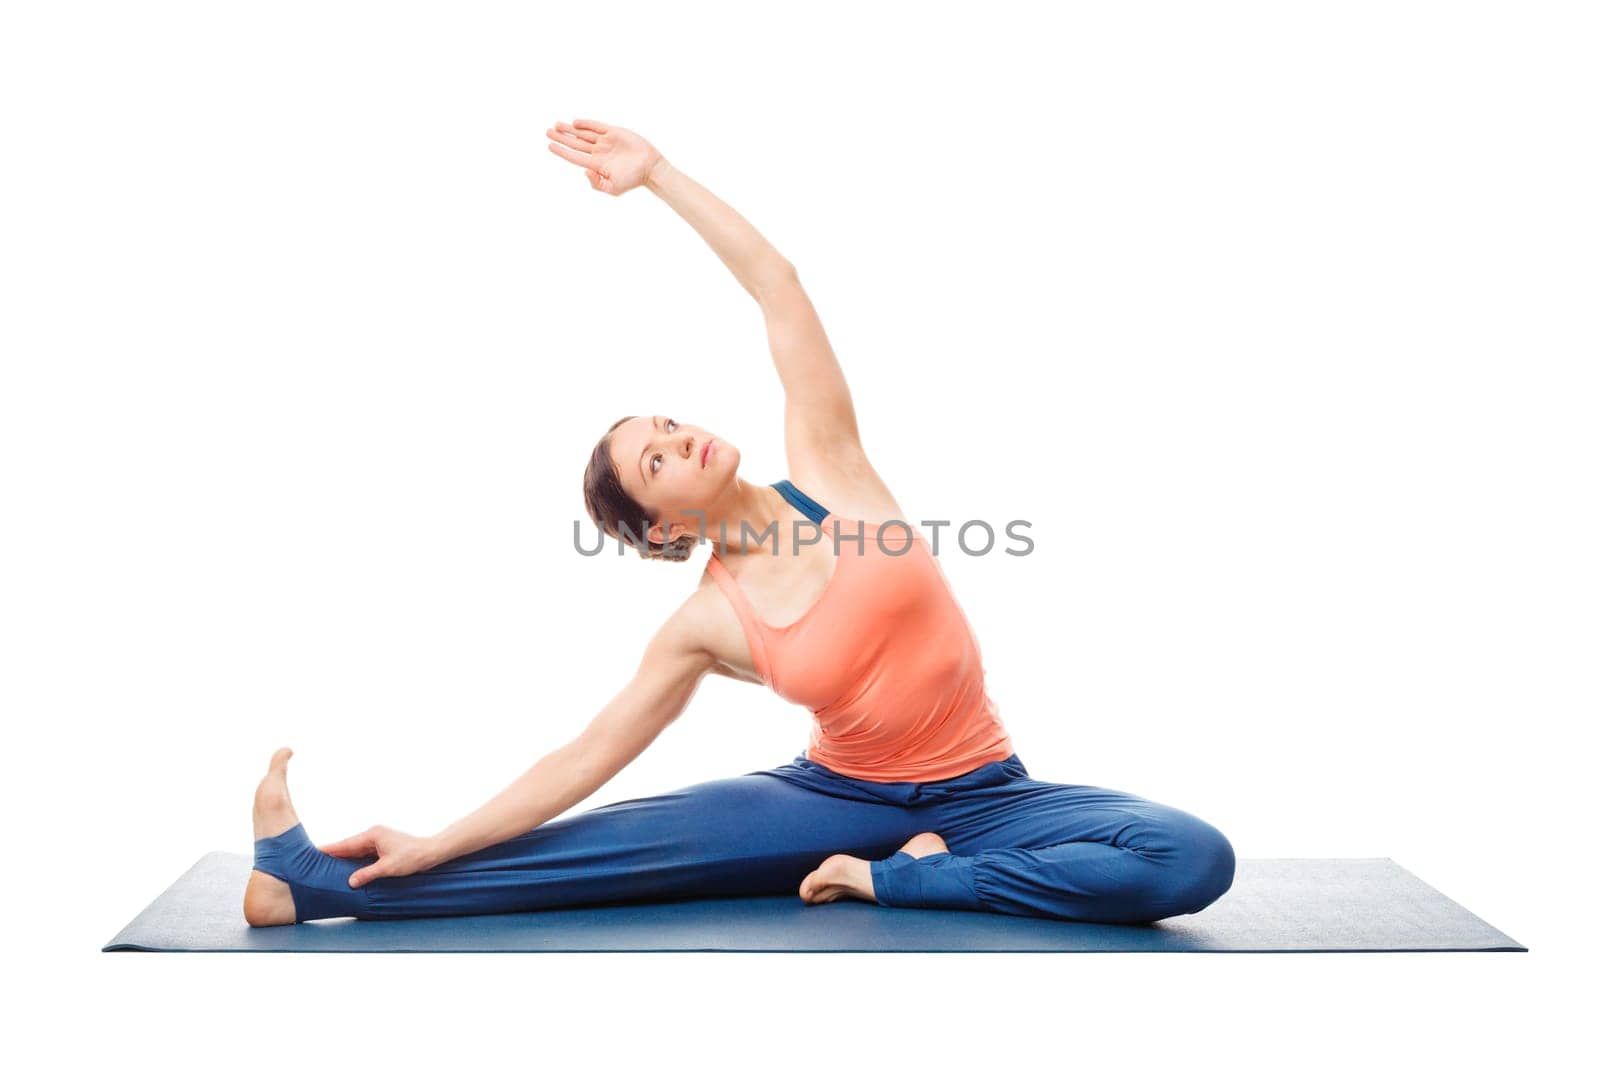 Beautiful sporty fit yogini woman practices yoga asana parivrtta janu sirsasana - revolved head-to-knee pose beginner easy posture variation isolated on white background